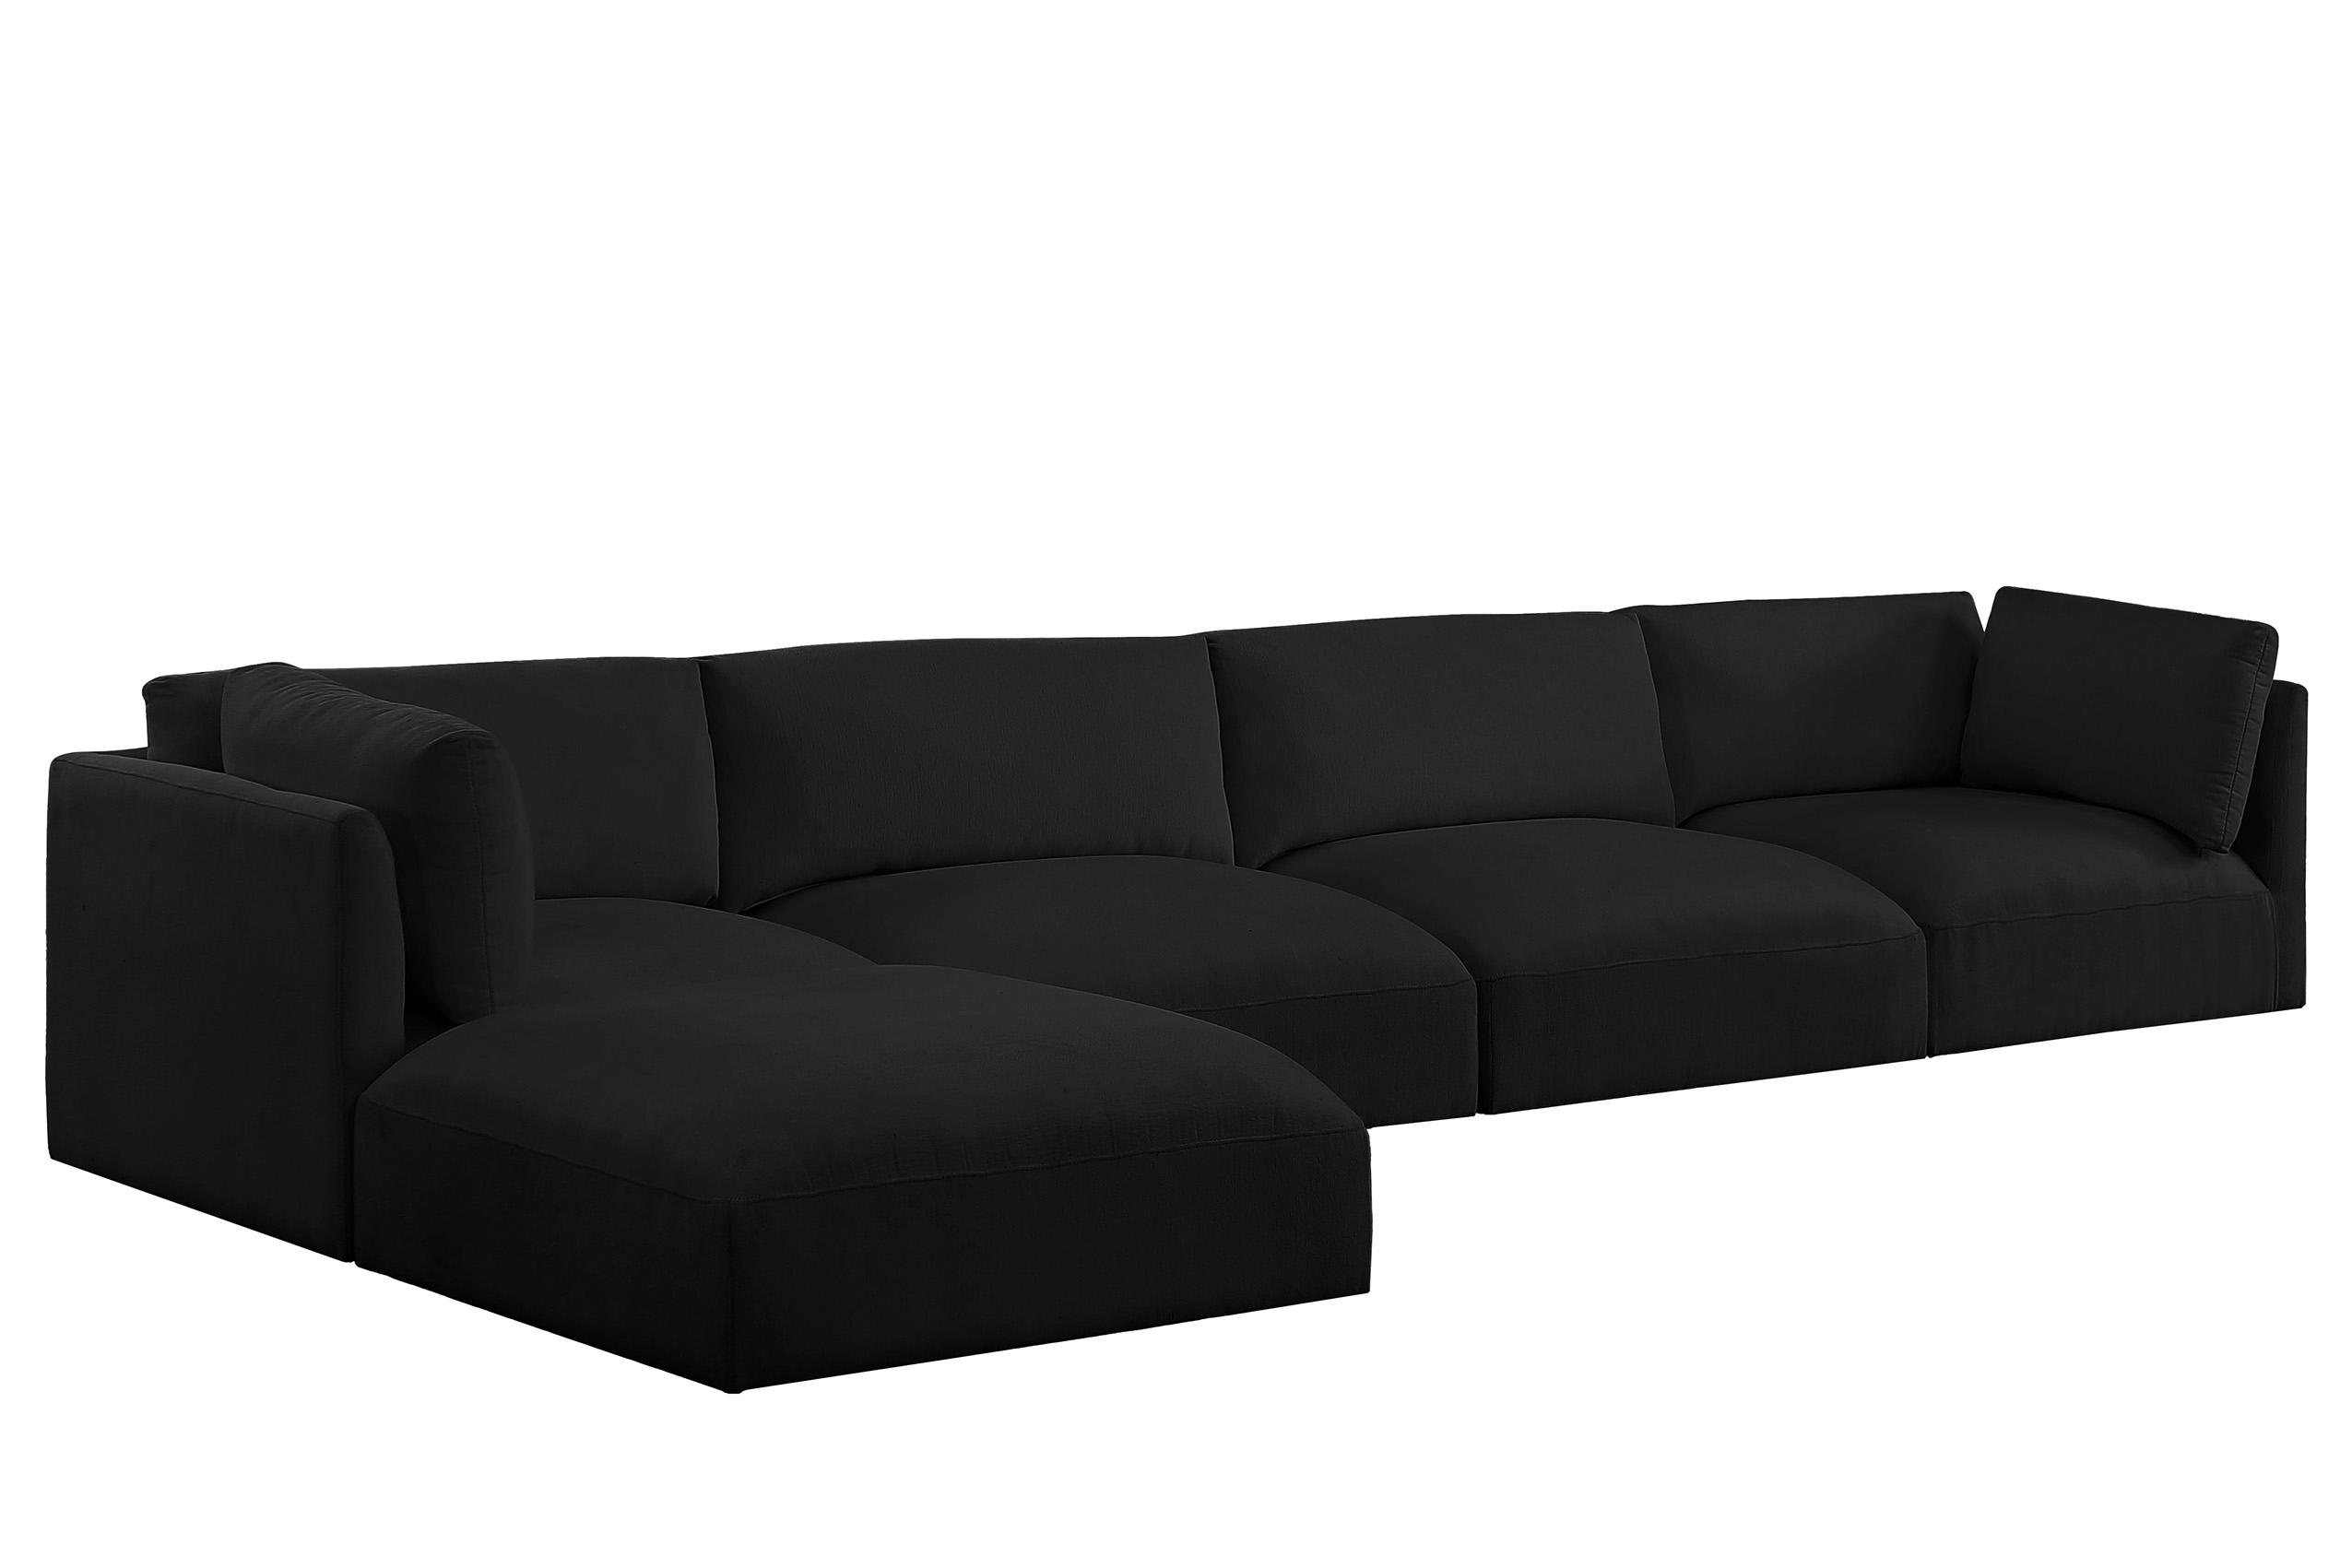 Contemporary, Modern Modular Sectional Sofa EASE 696Black-Sec5A 696Black-Sec5A in Black Fabric